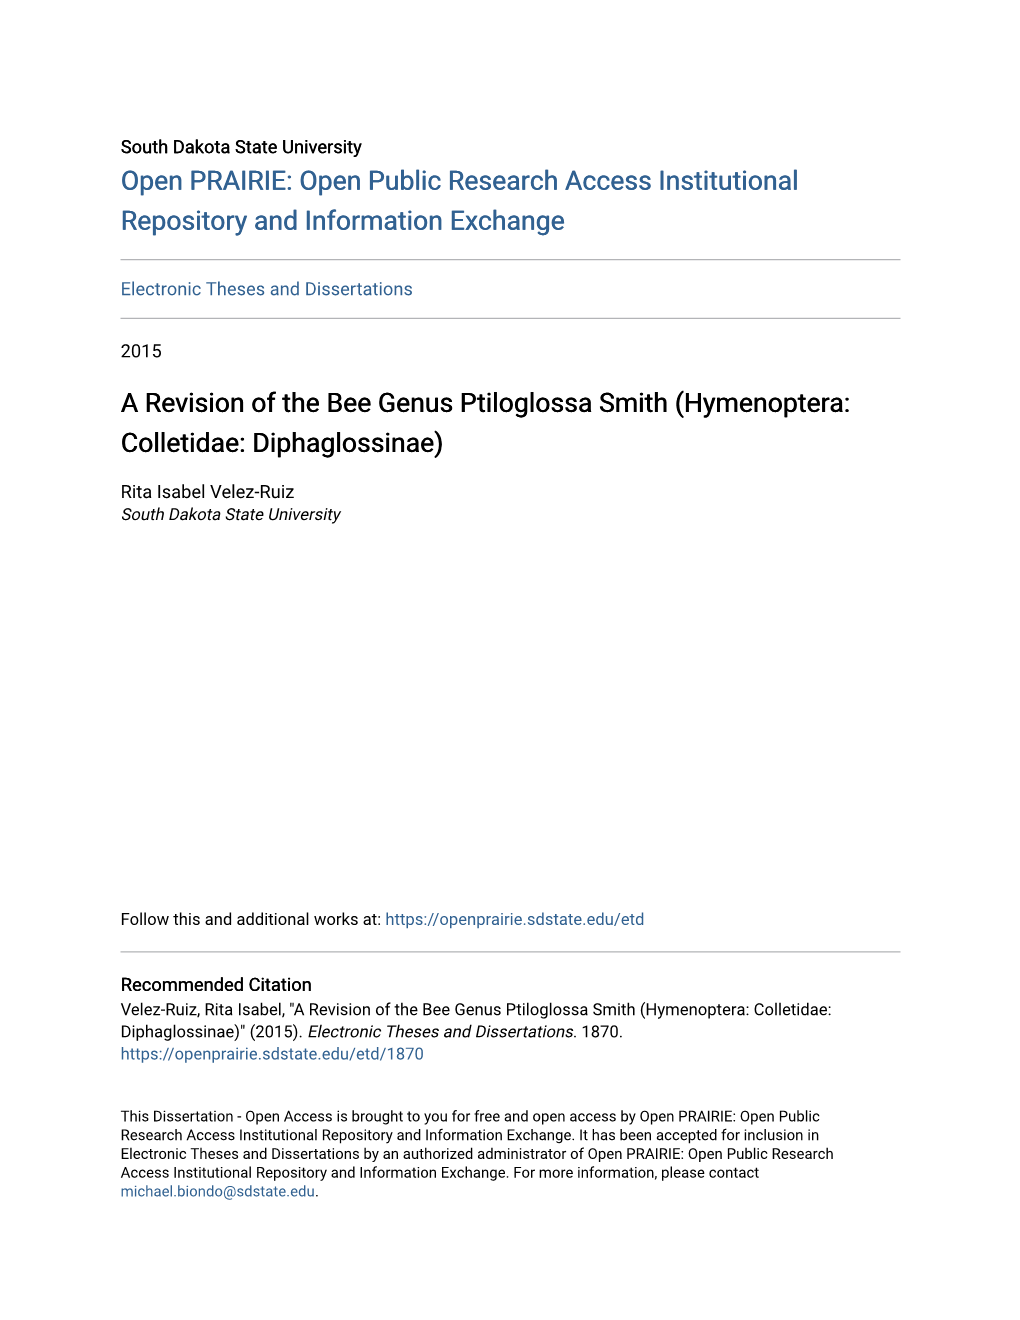 A Revision of the Bee Genus Ptiloglossa Smith (Hymenoptera: Colletidae: Diphaglossinae)